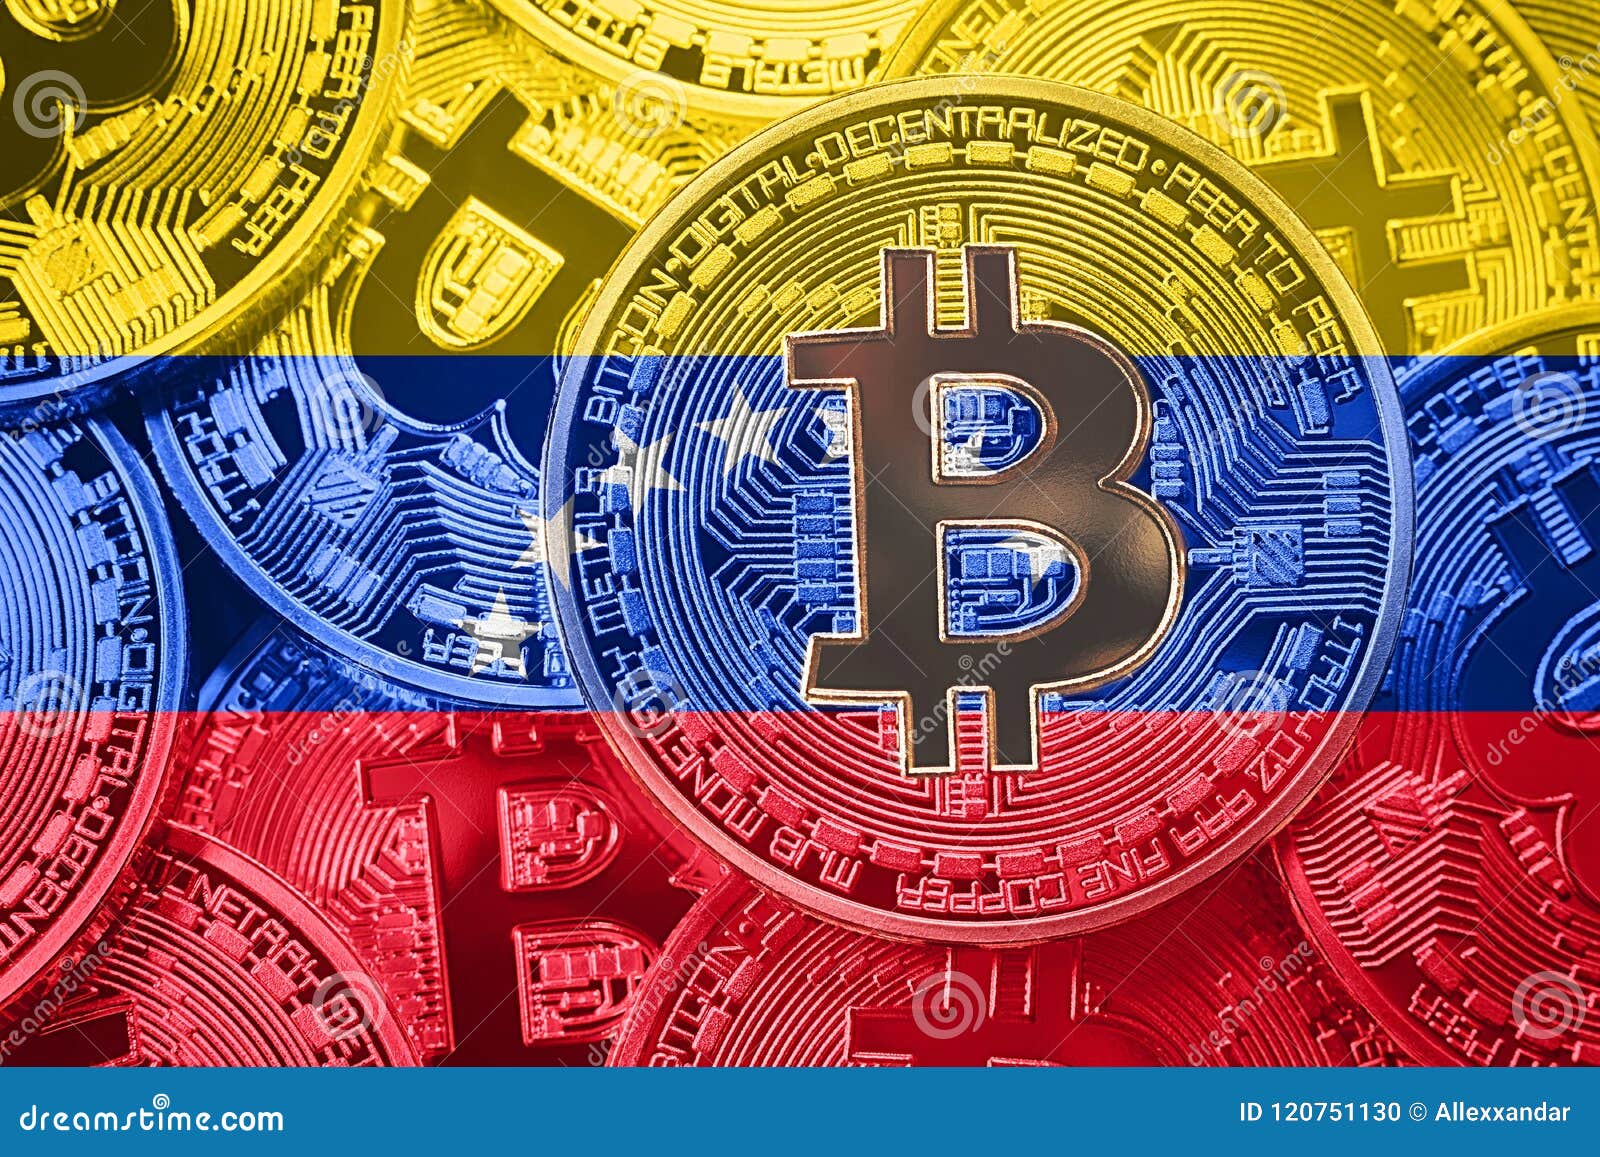 stack of bitcoin venezuela flag. bitcoin cryptocurrencies concept. btc background.